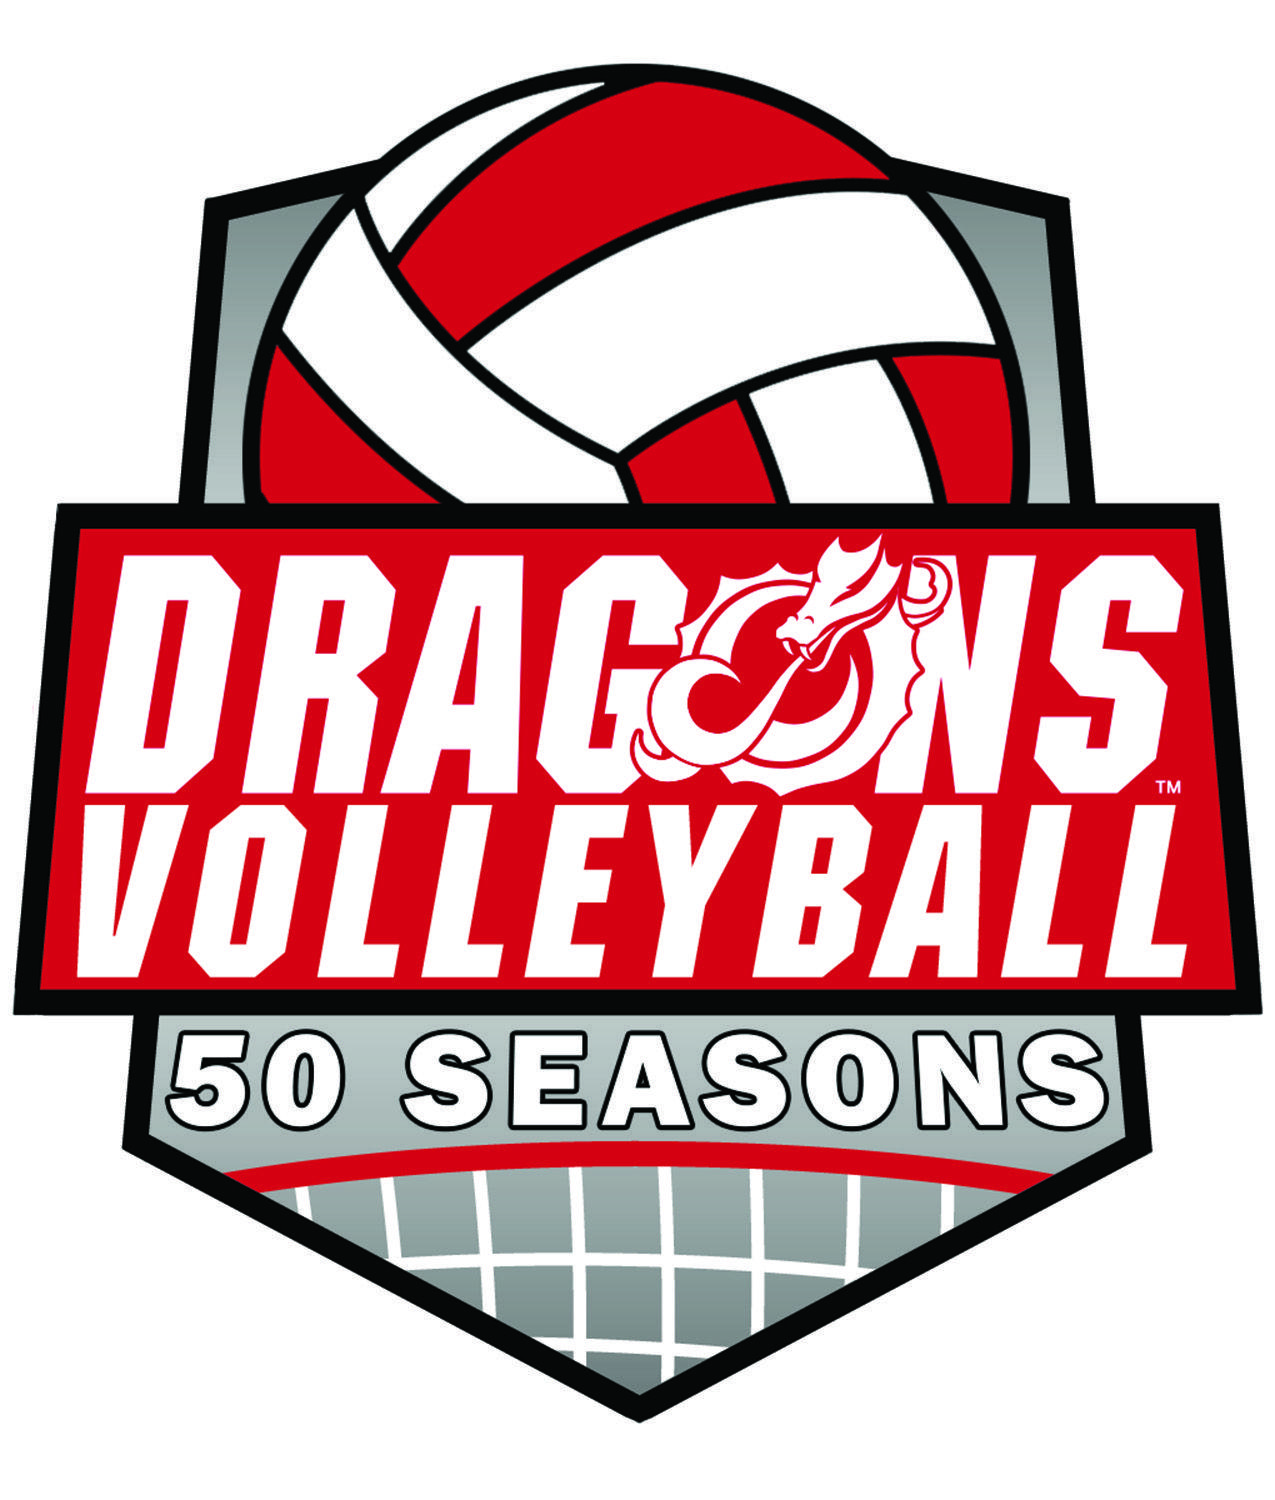 MSUM Logo - MSUM Tickets - Celebration of 50 Seasons of Dragon Volleyball